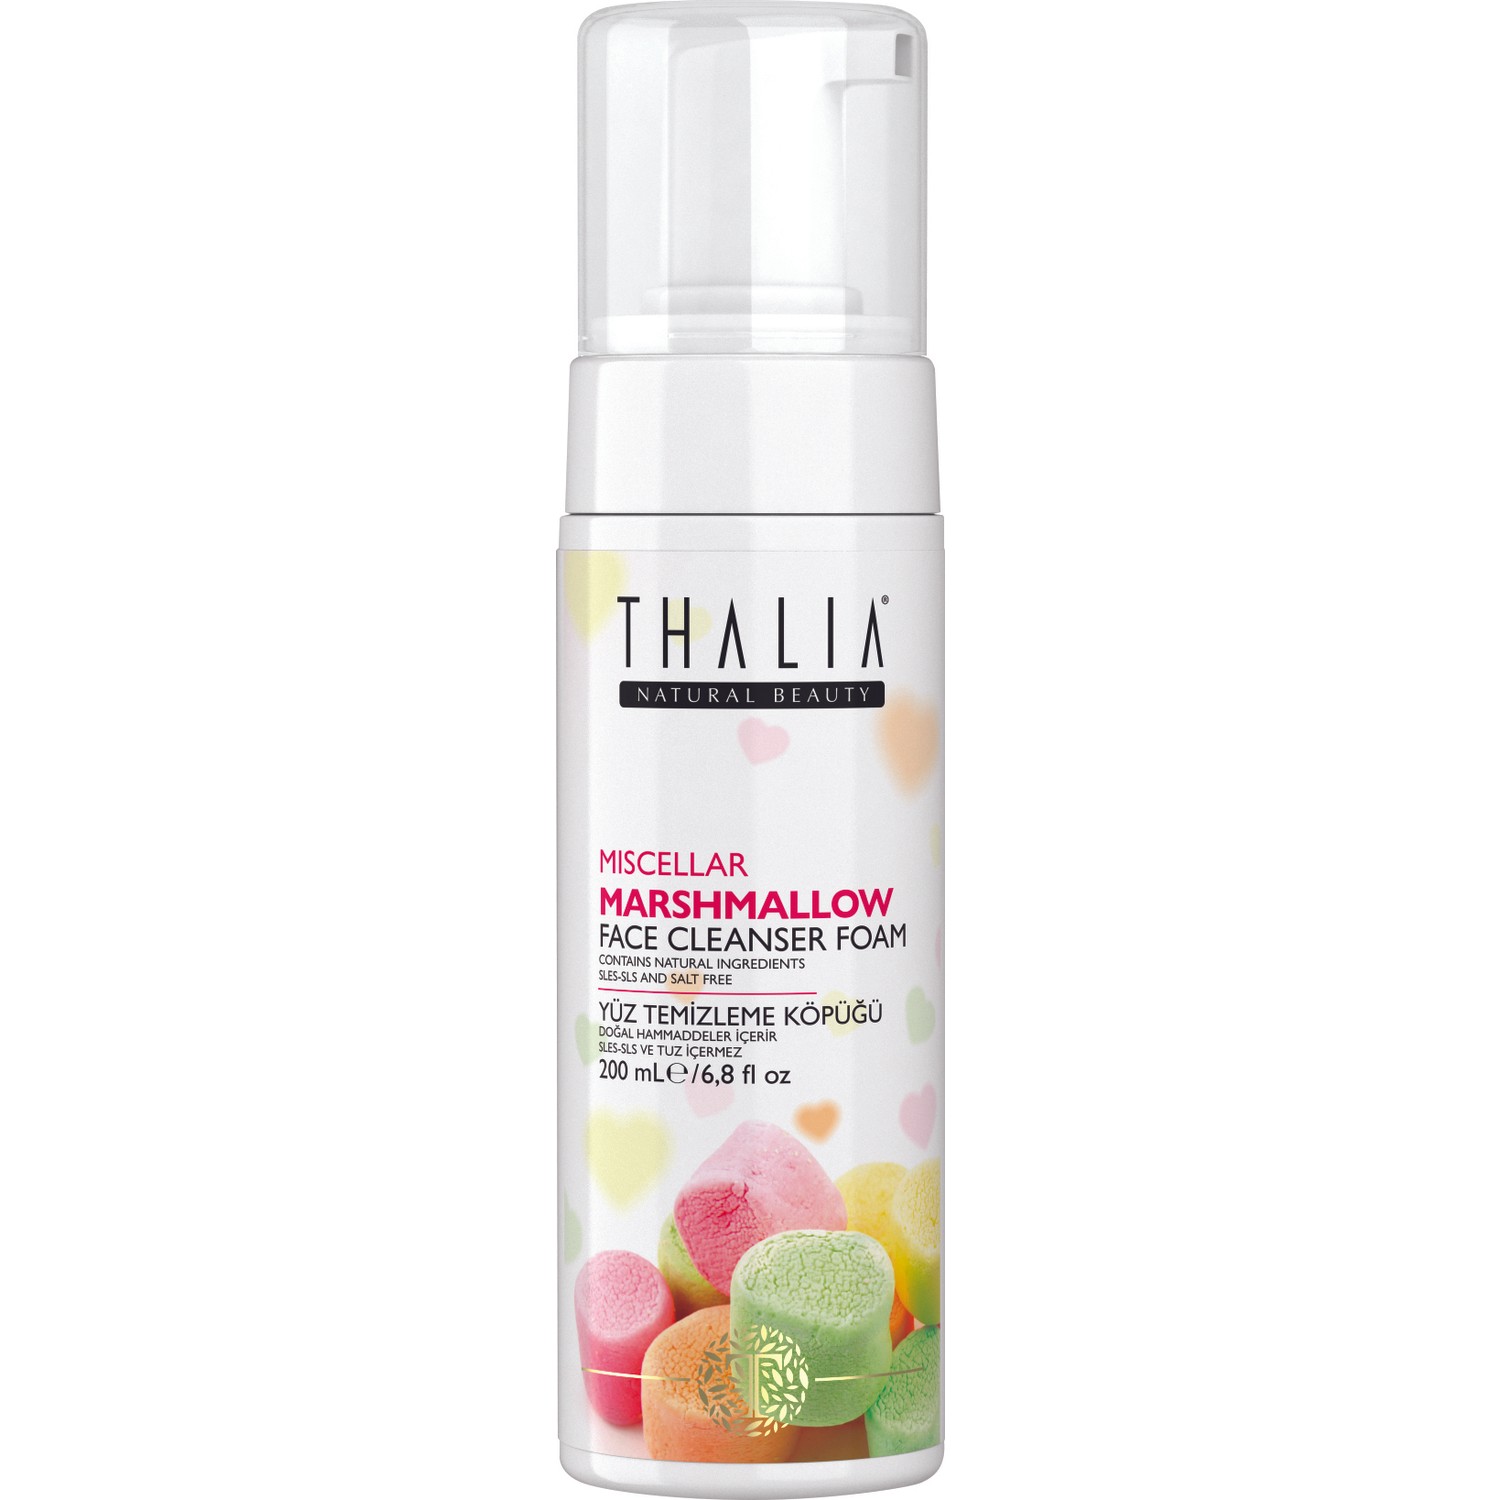 Очищающая пенка Thalia & Miselar Marshmallow для лица, 200 мл мицеллярный шампунь thalia natural beauty marshmallow 300 мл